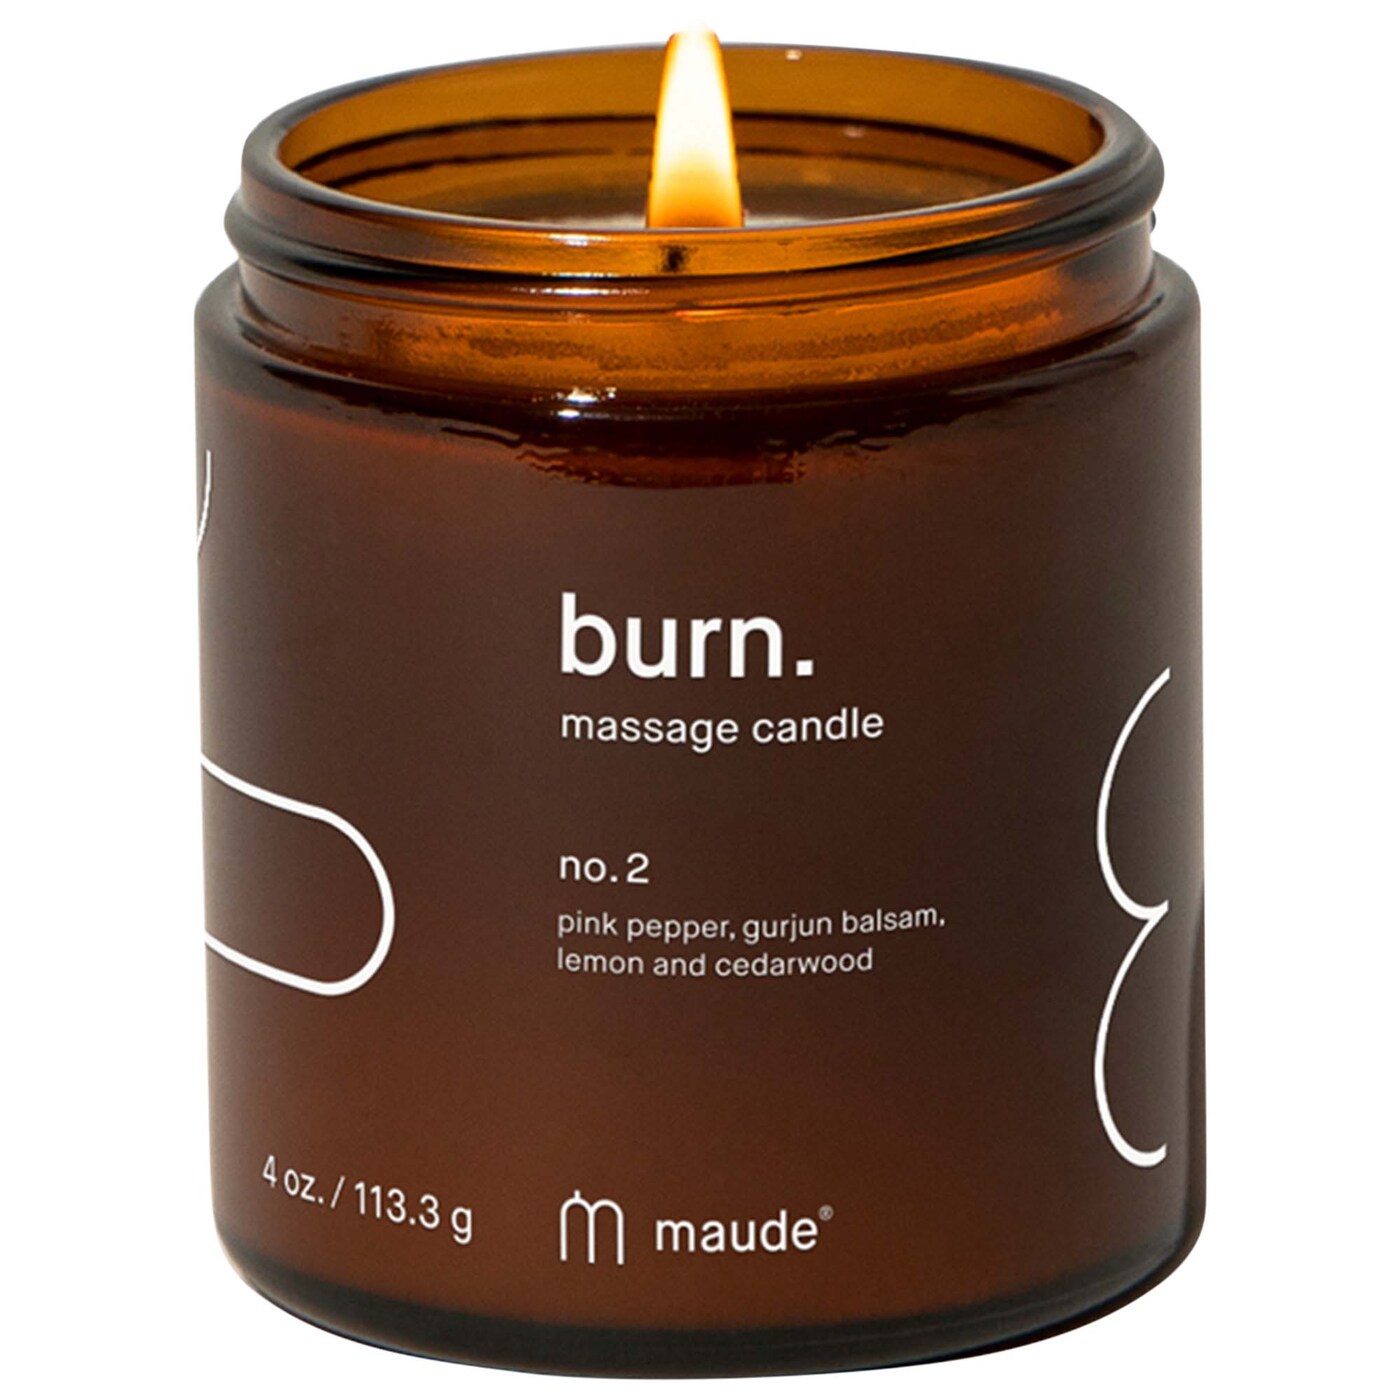 Lumanare pentru masaj Burn no. 2 (piper roz si gurjun balsam), 113.3 g, Maude